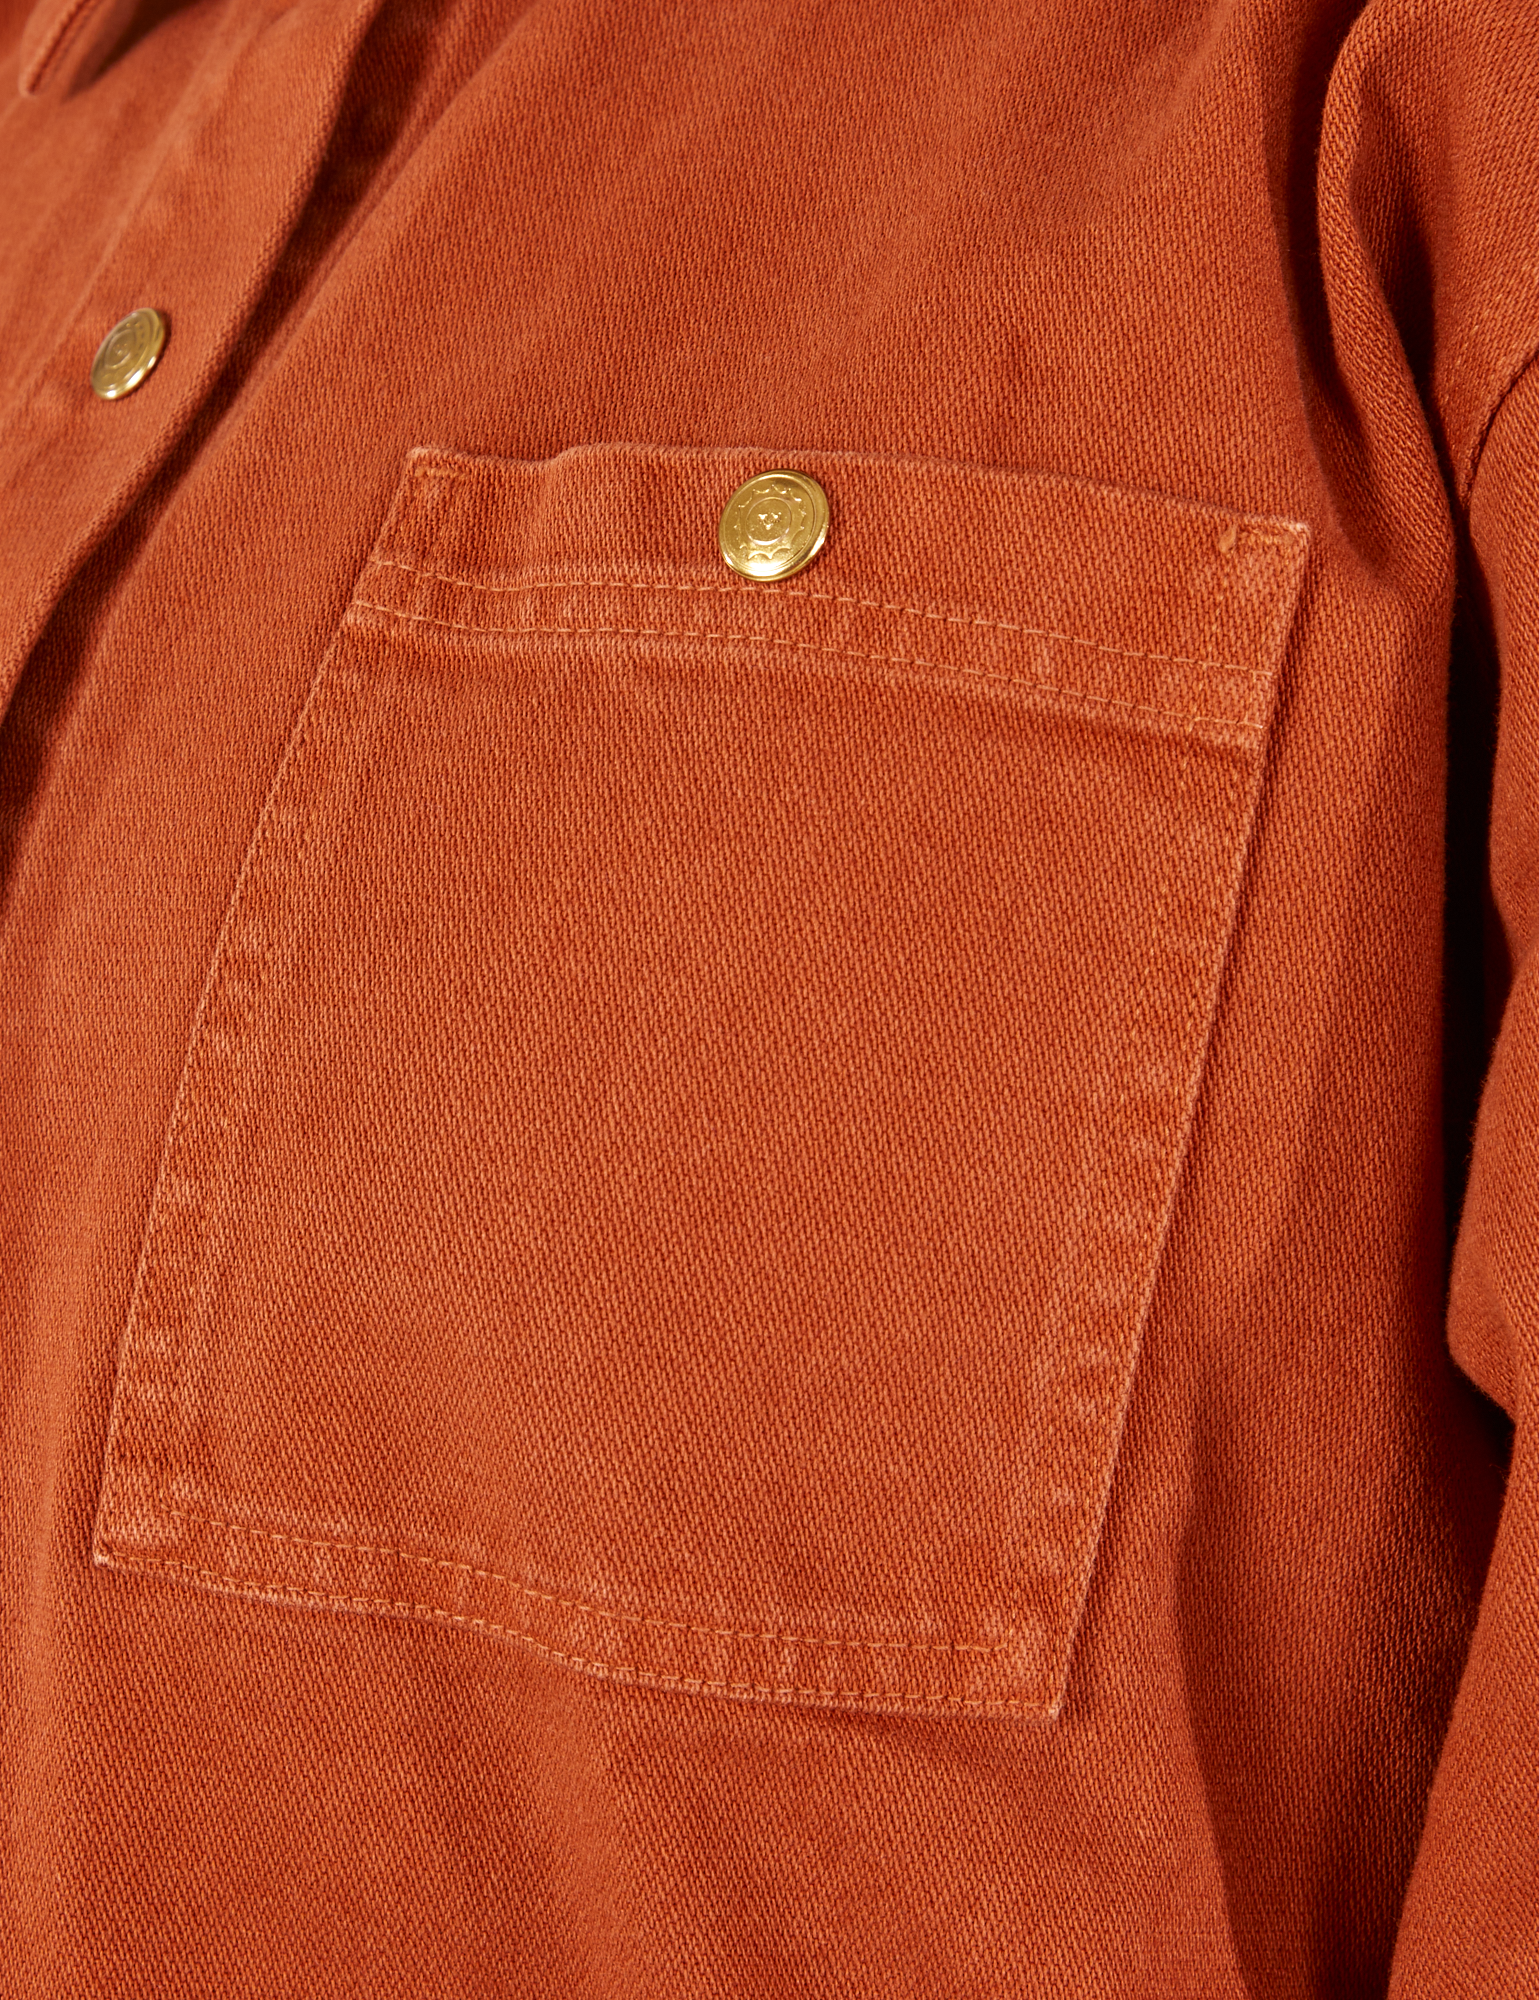 Denim Work Jacket in Burnt Terracotta front pocket close up with sun baby brass button